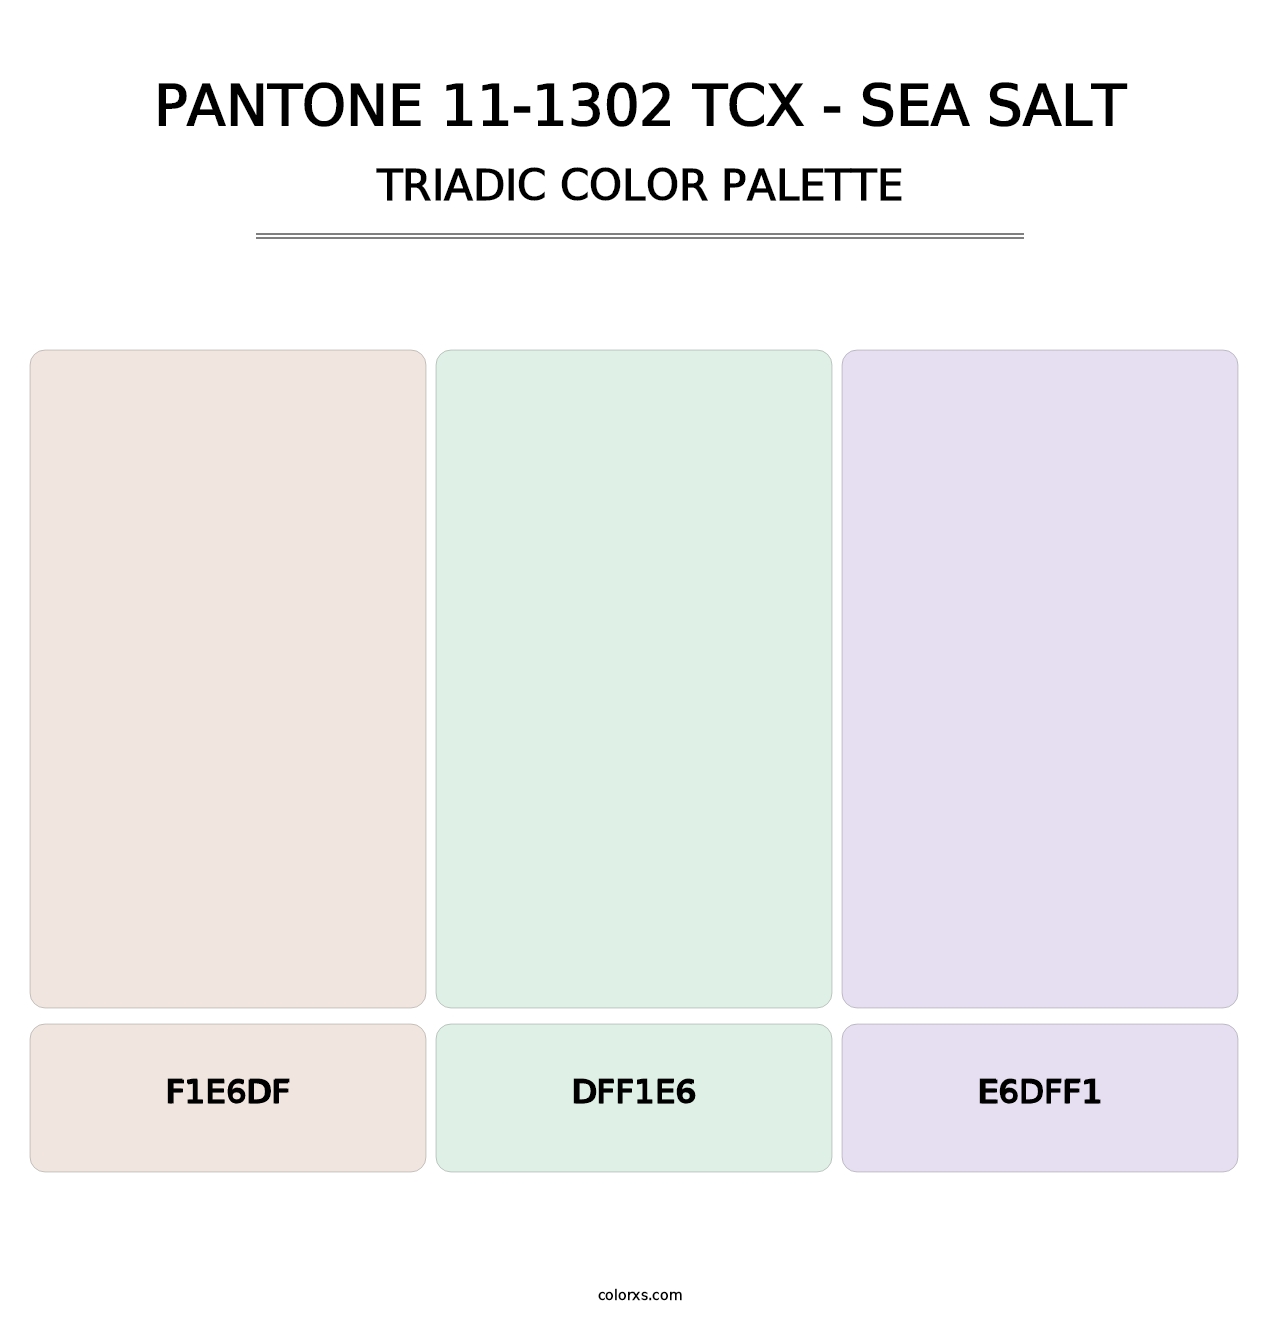 PANTONE 11-1302 TCX - Sea Salt - Triadic Color Palette